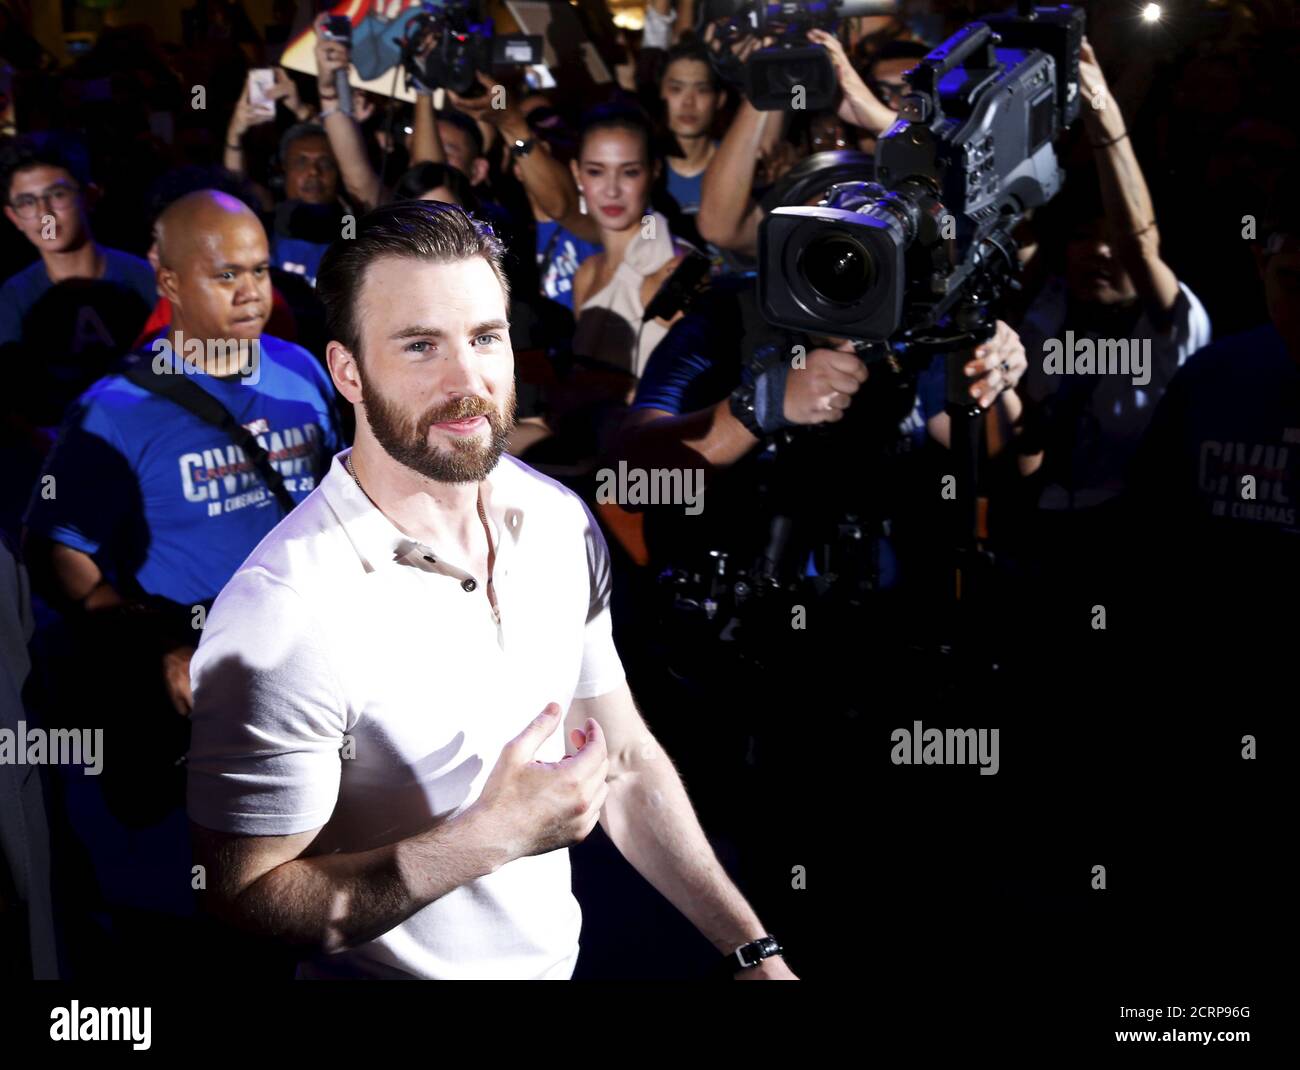 Actor Chris Evans arrives for a blue carpet event for the movie 'Captain America: Civil War' in Singapore, April 21, 2016. REUTERS/Edgar Su Stock Photo